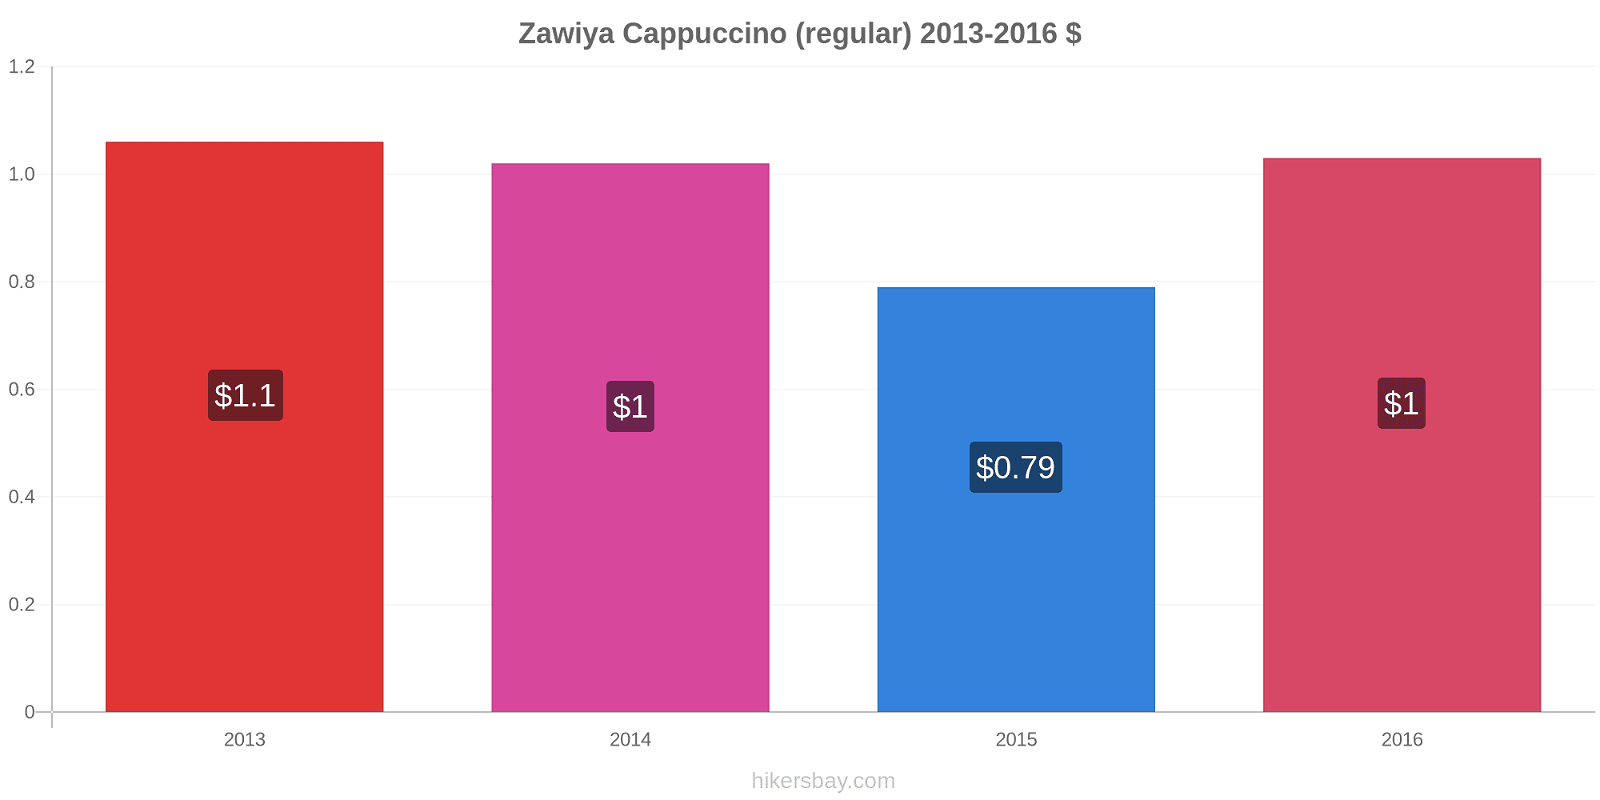 Zawiya price changes Cappuccino (regular) hikersbay.com